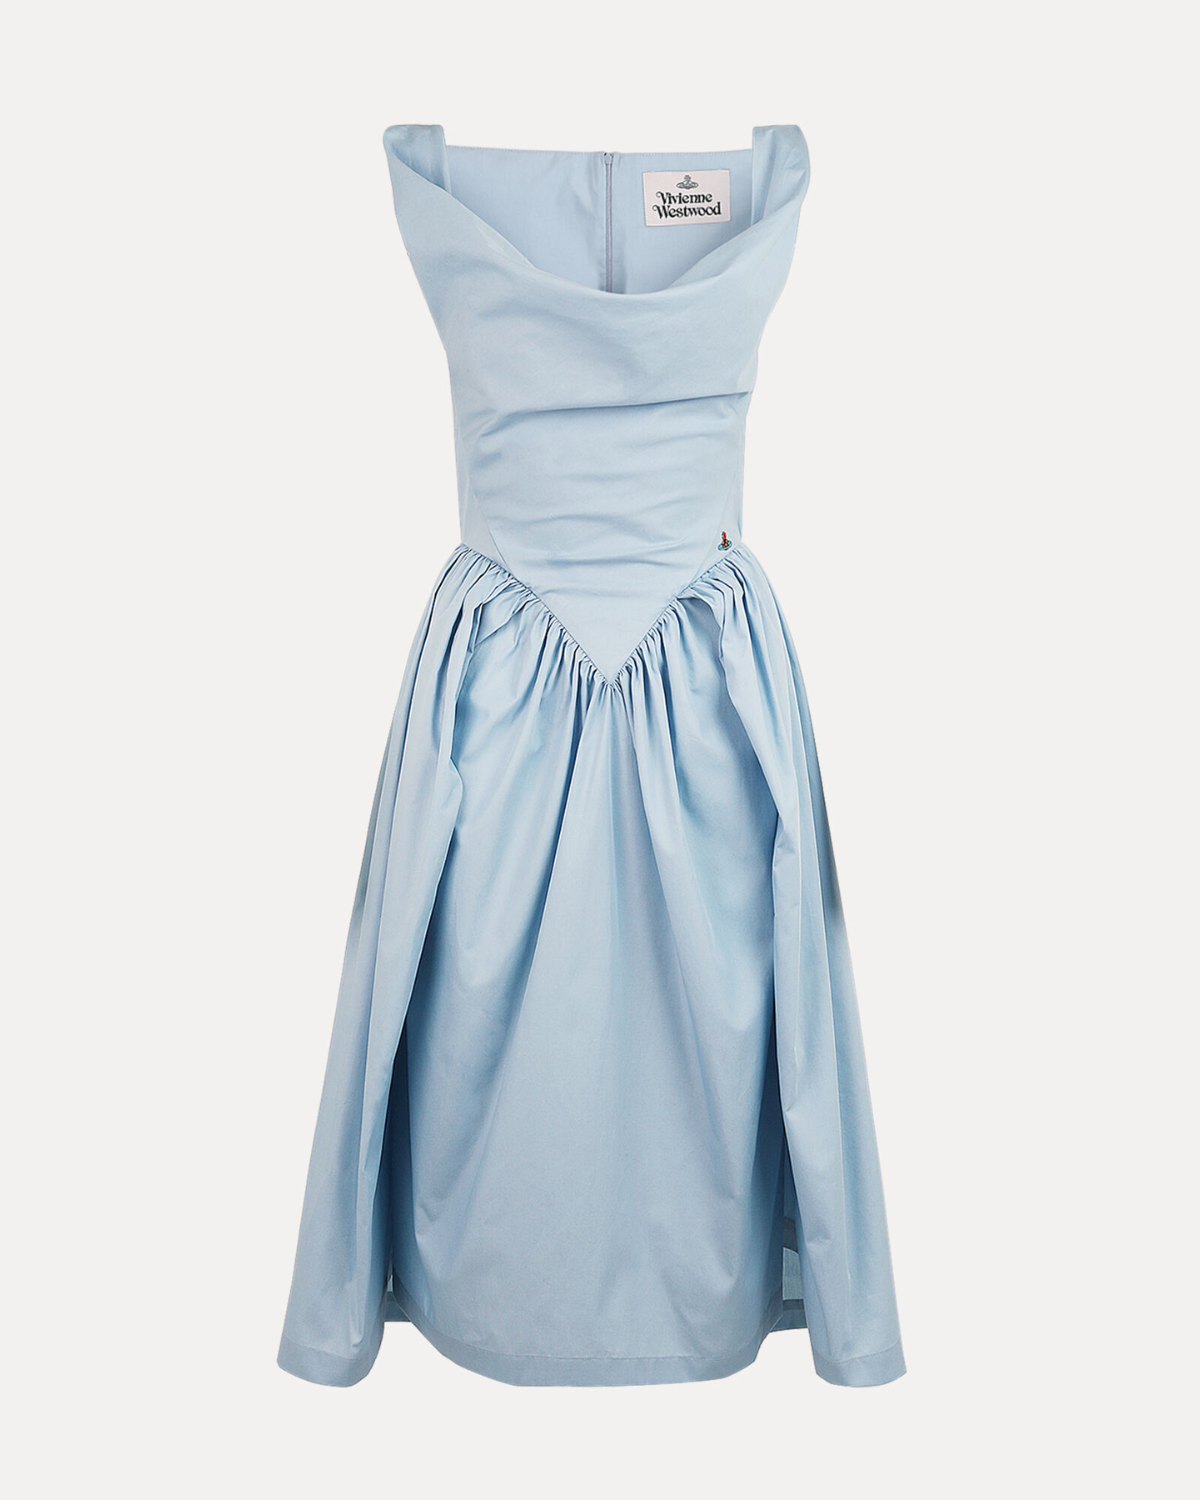 Vivienne Westwood Sunday dress